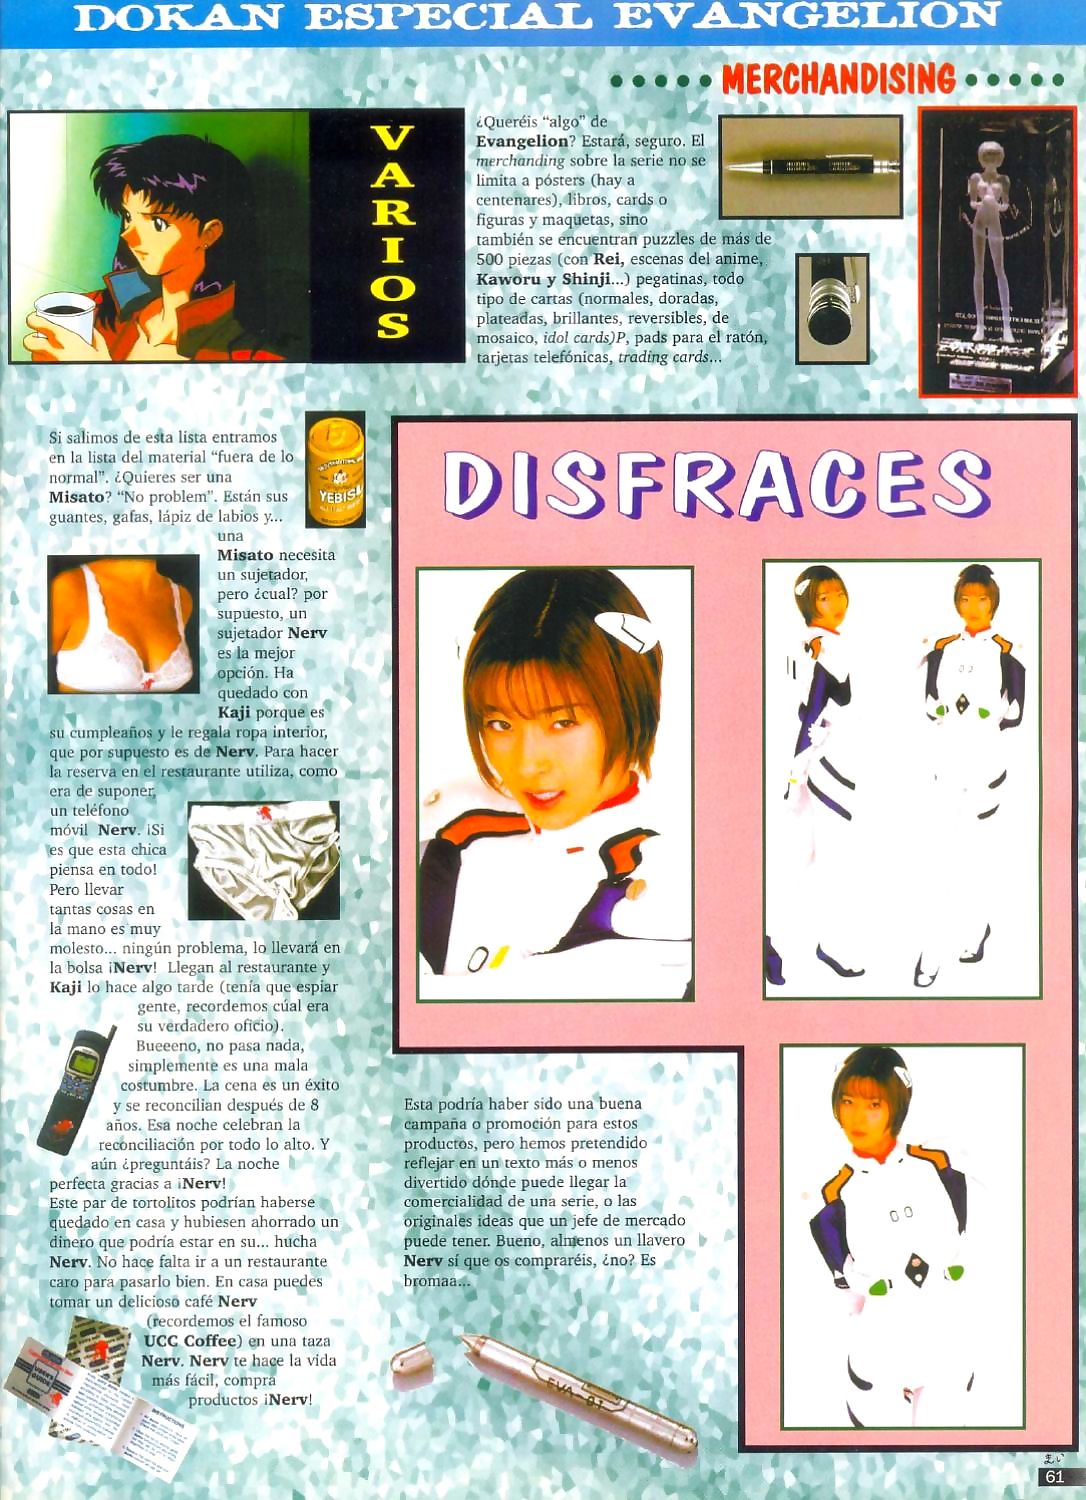 Revista Dokan Evangelion - part 4